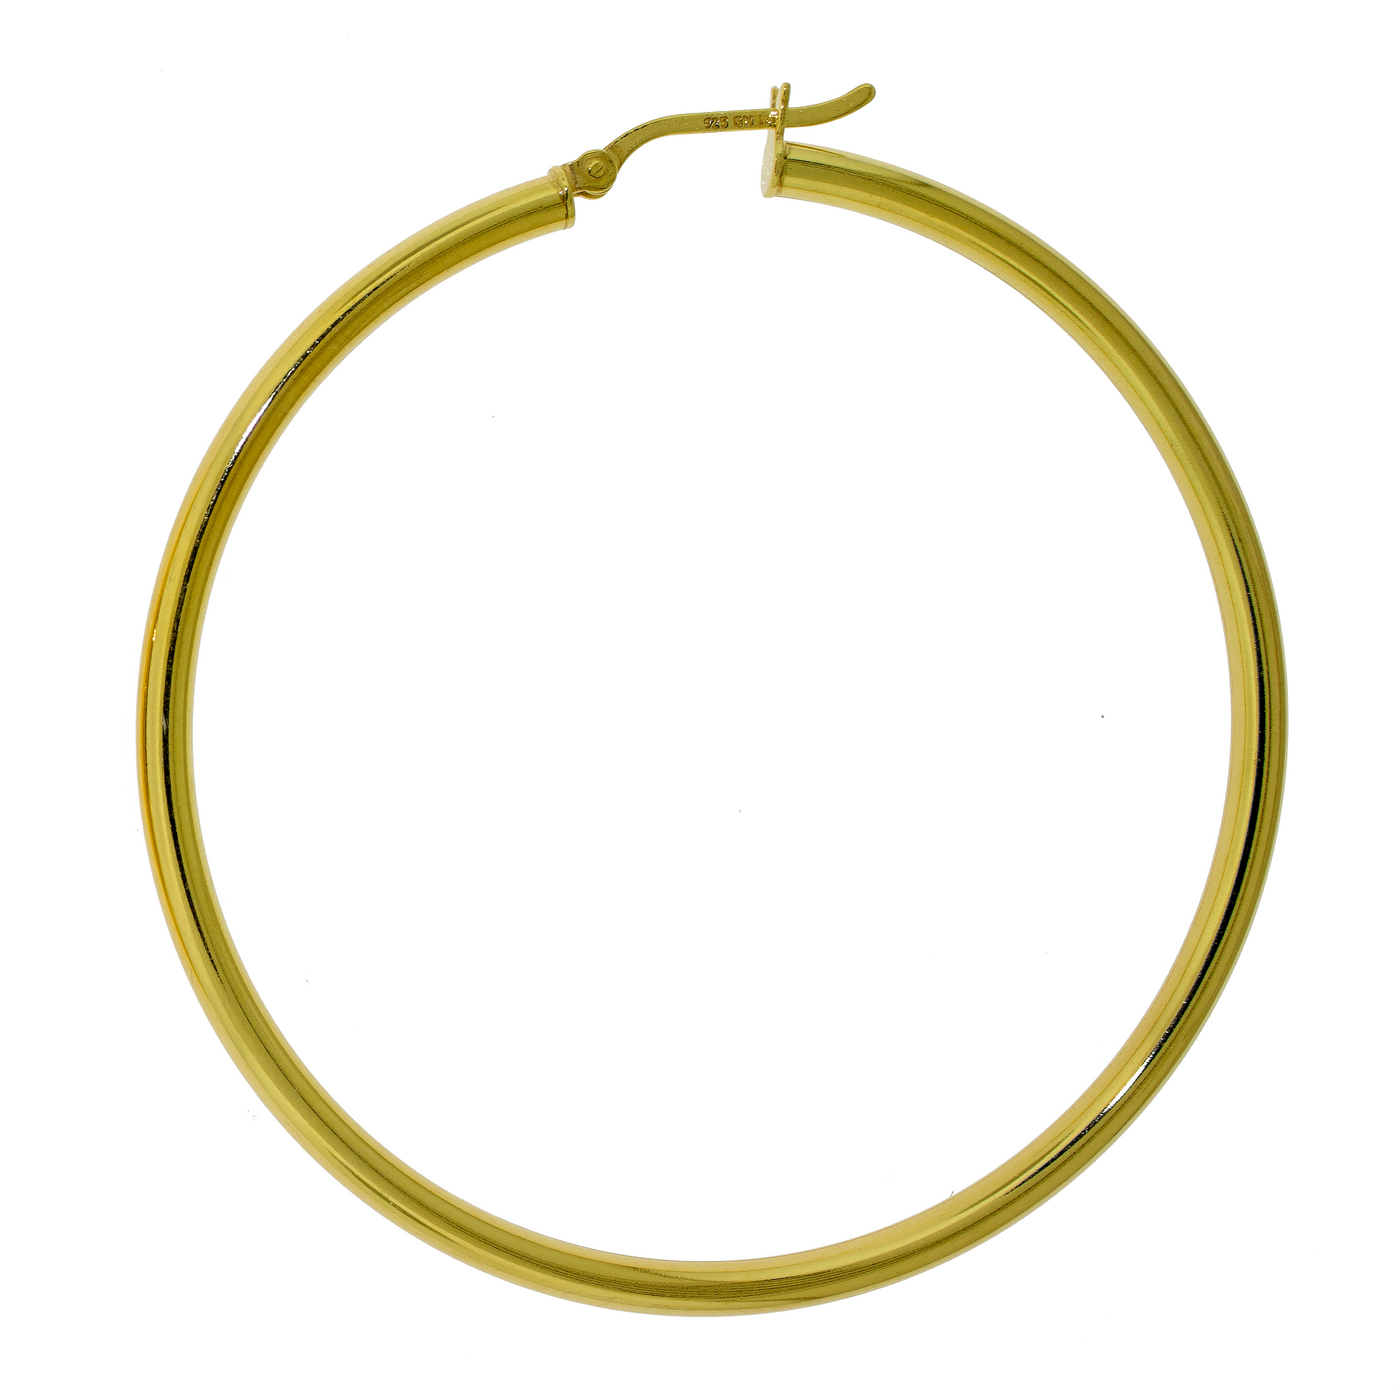 Hoop Earring 3 mm - Gold